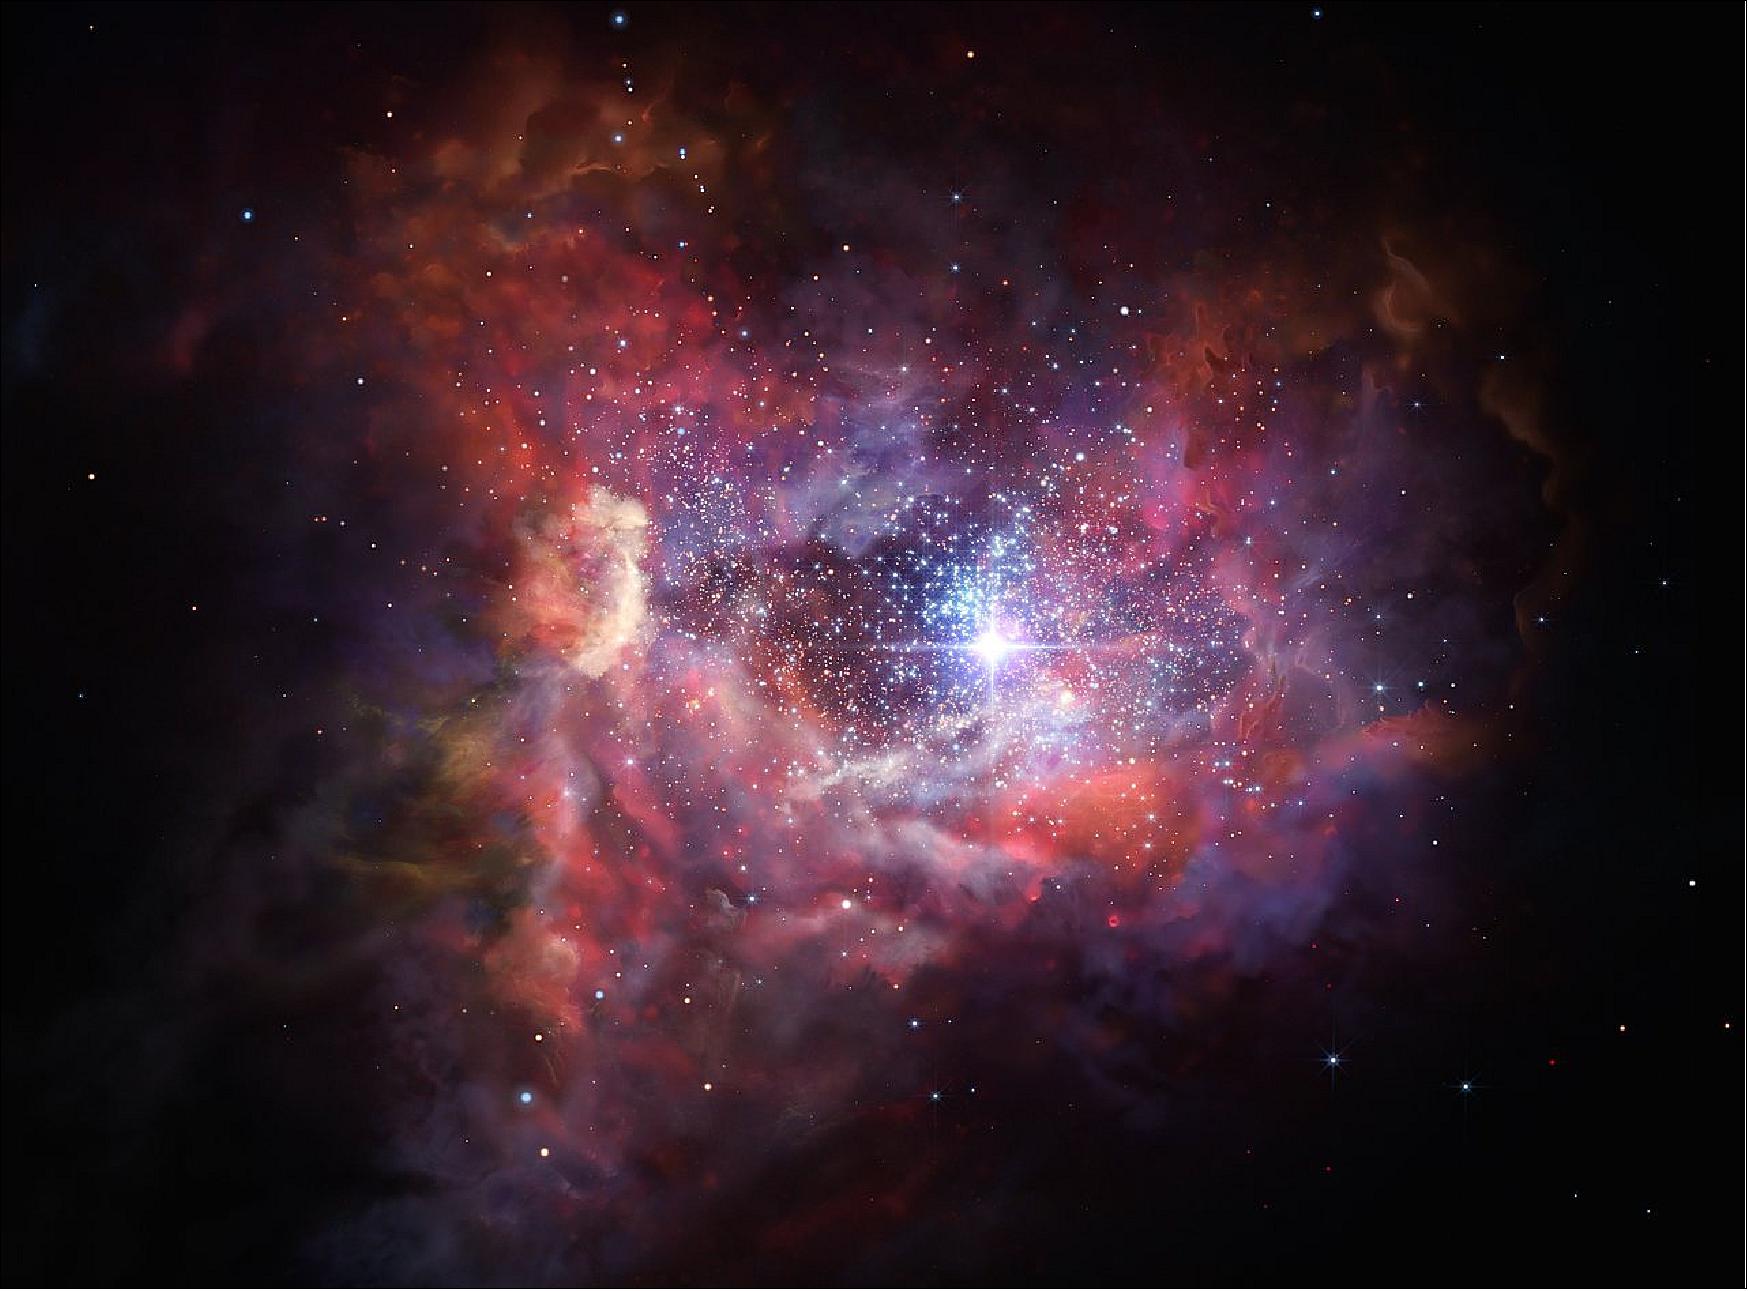 Figure 37: Artist's impression of the remote dusty galaxy A2744_YD4 (image credit: ESO)